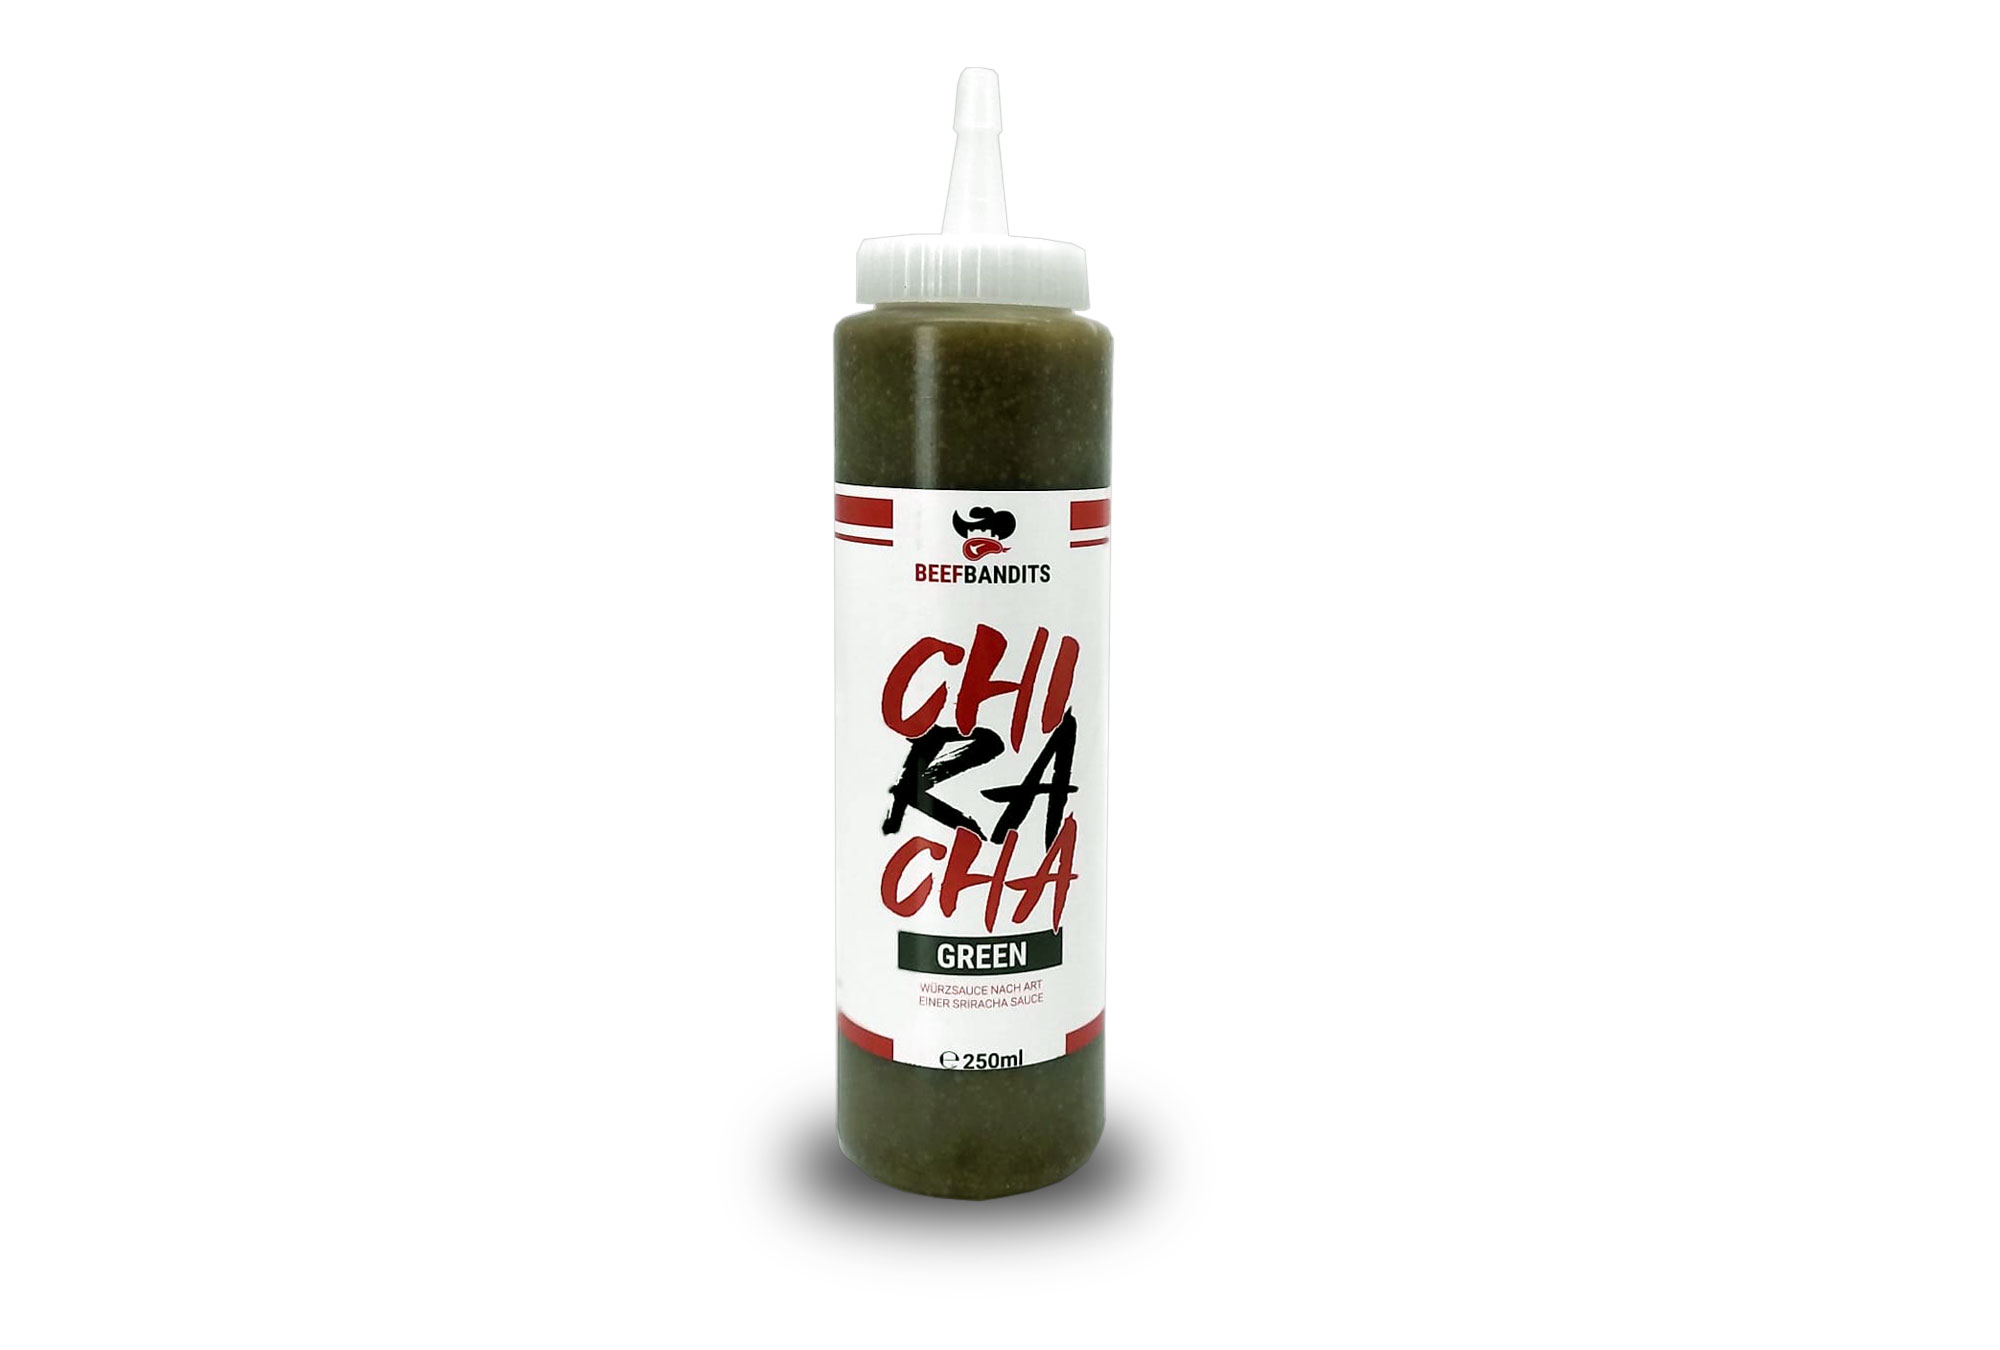 Sriracha Sauce - CHI RA CHA - Handmade green Chili Sauce